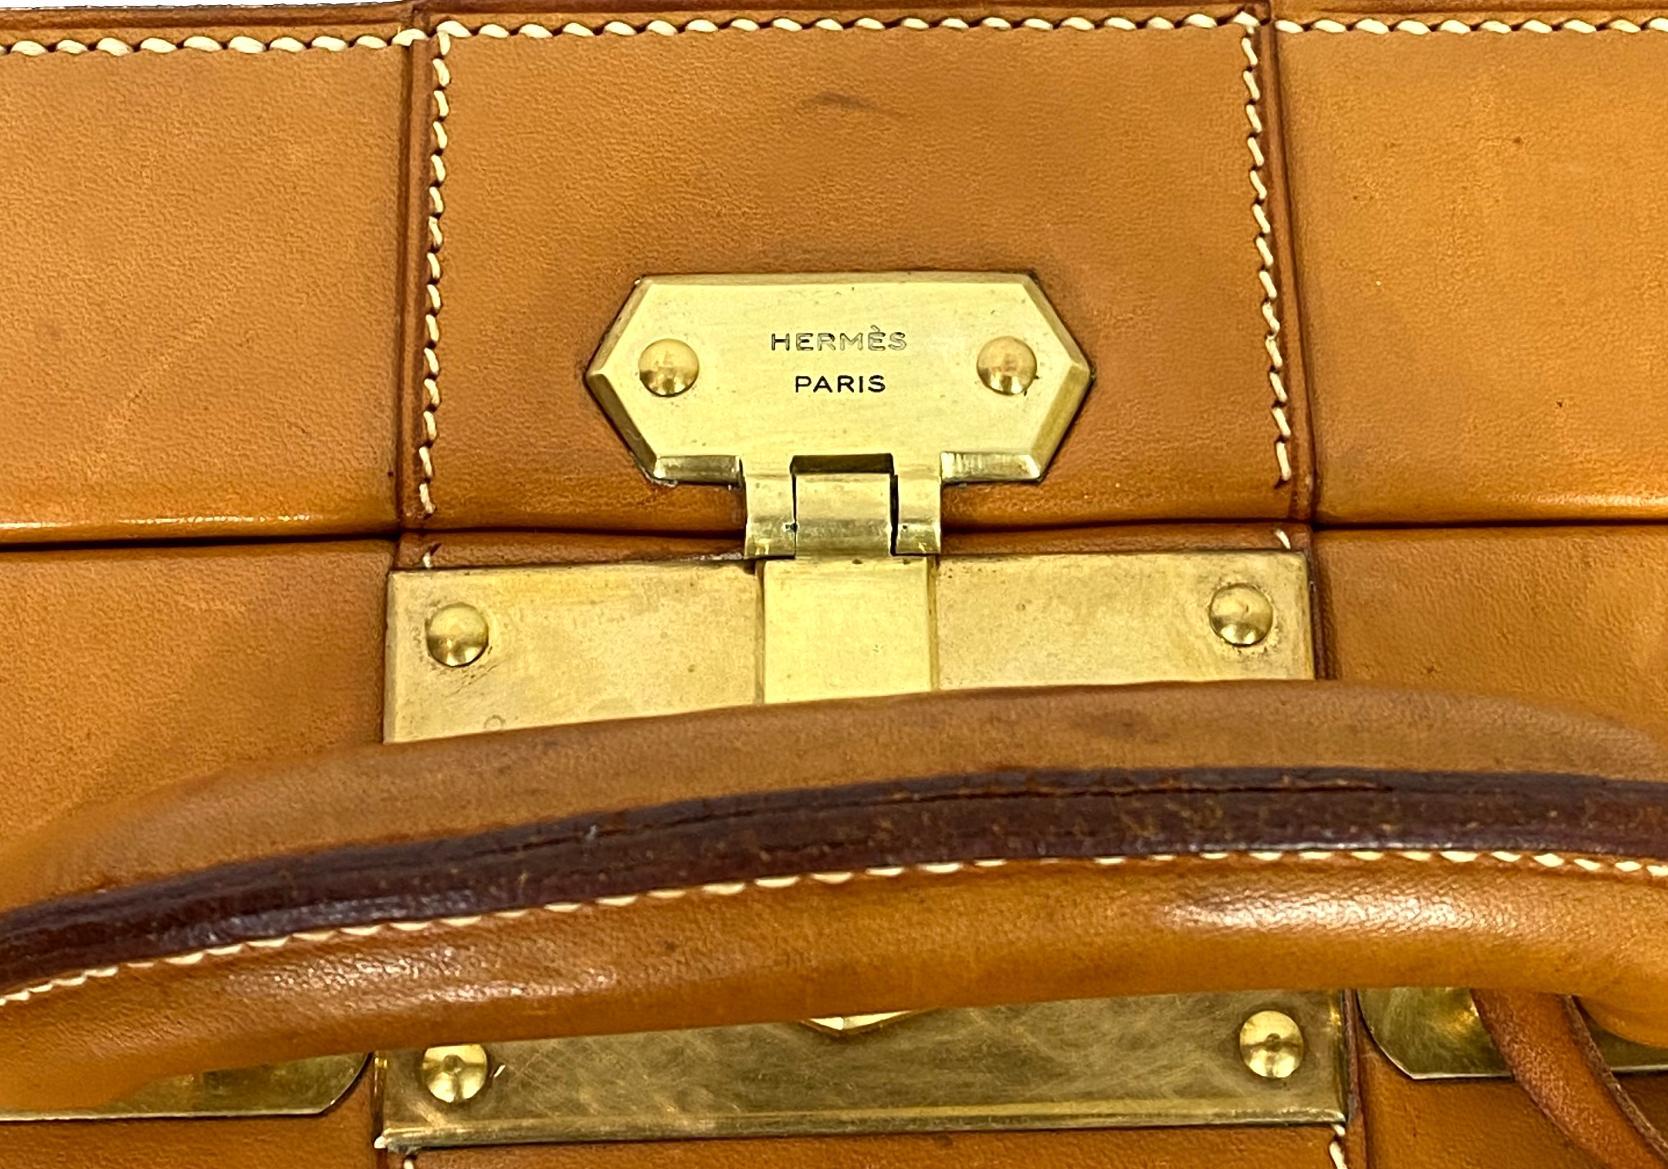 Hermès Vintage Automobile Valise Suitcase Travel Luggage, circa 1972. 2